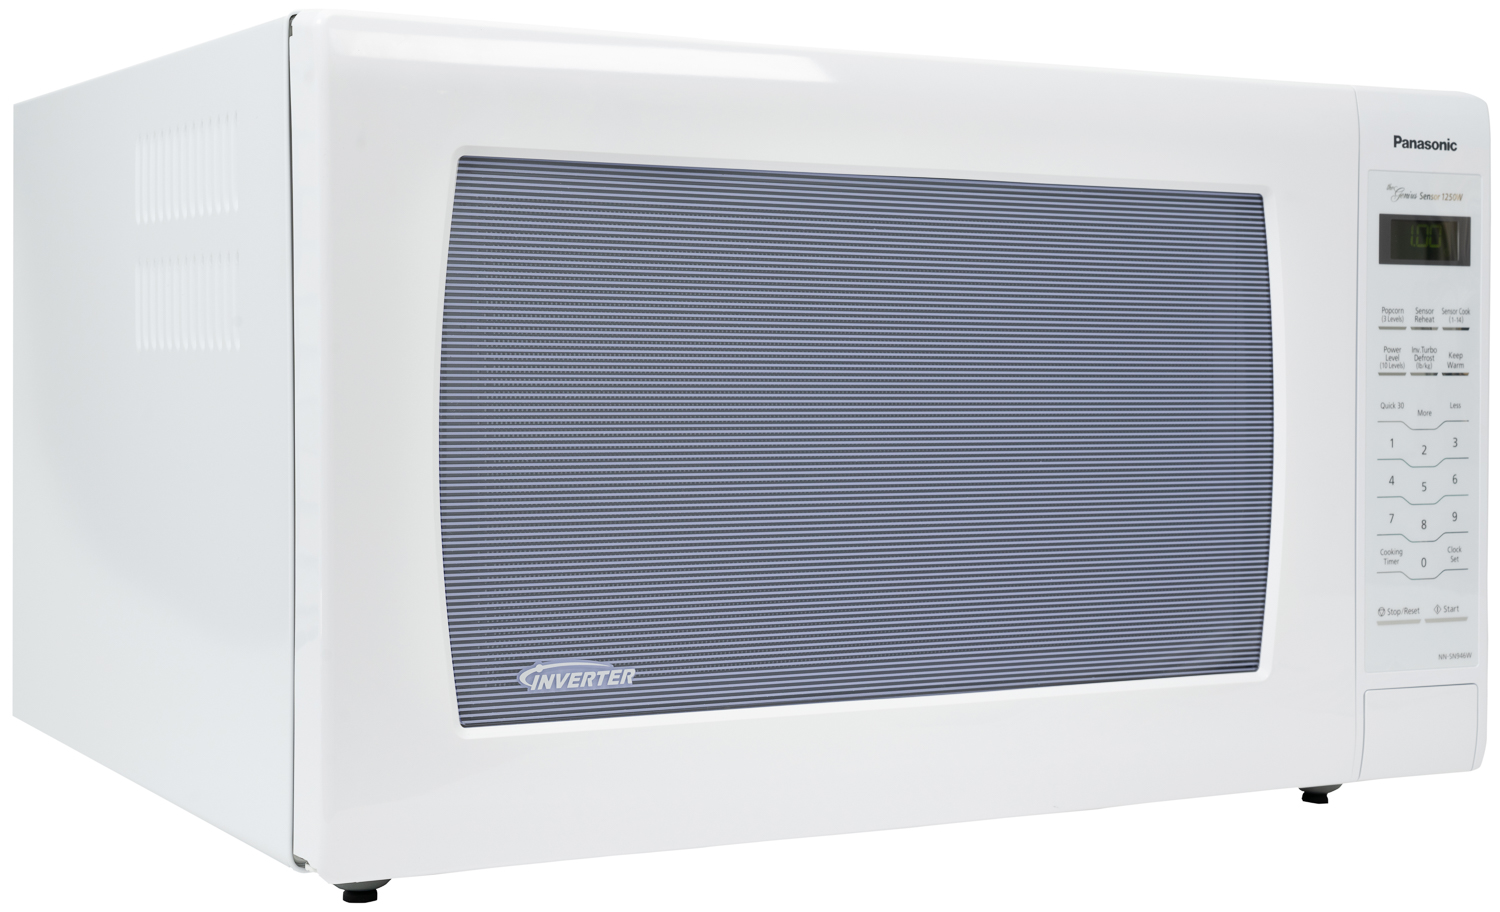 Panasonic 2.2 Cu. Ft. Countertop Microwave Oven, 1250W Inverter Power